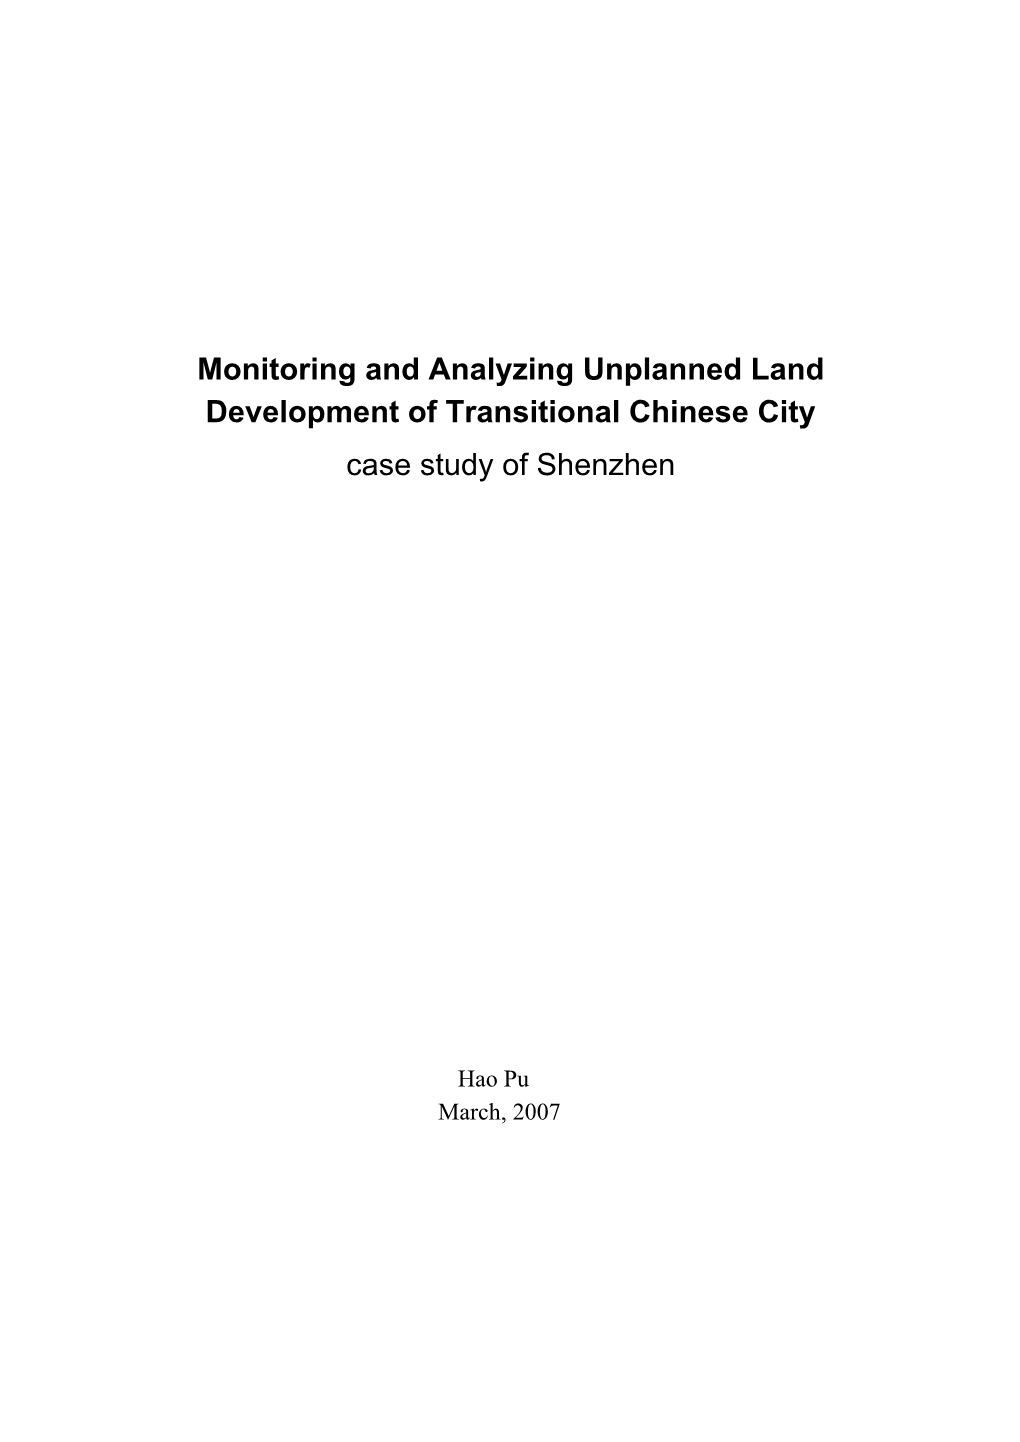 Monitoring and Analyzing Unplanned Land Development of Transitional Chinese City Case Study of Shenzhen